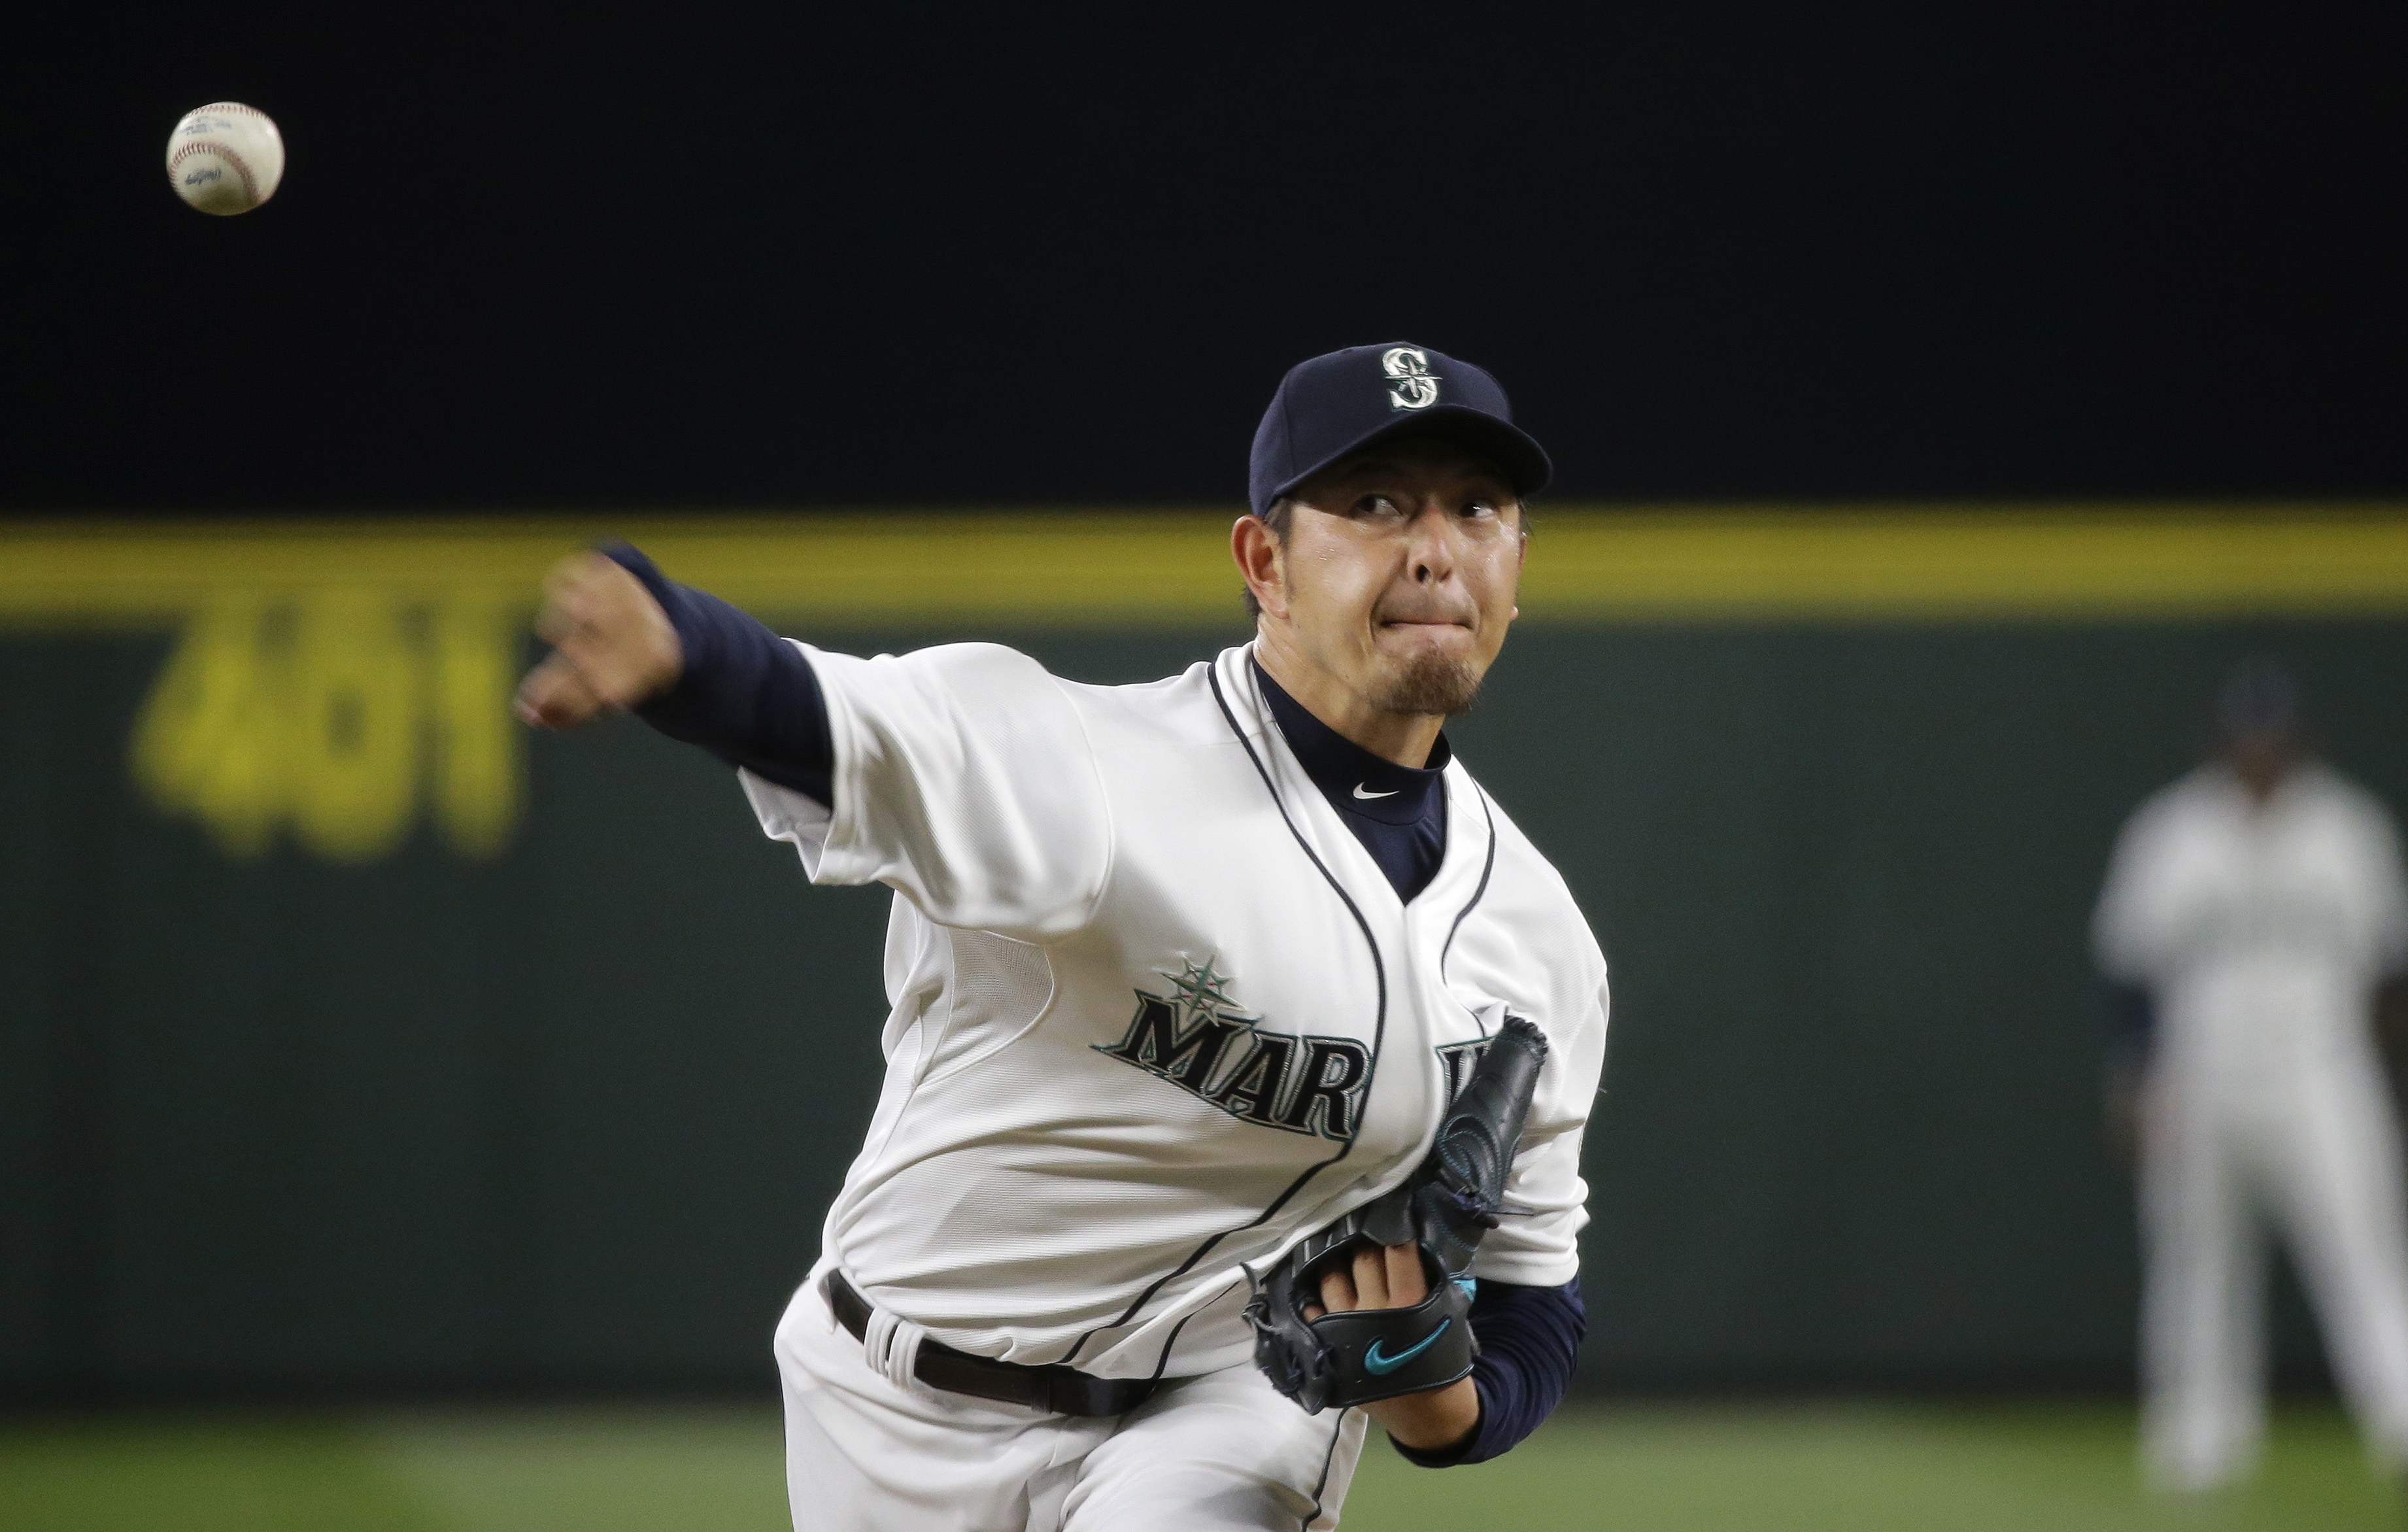 Baseball player Hisashi Iwakuma pitches